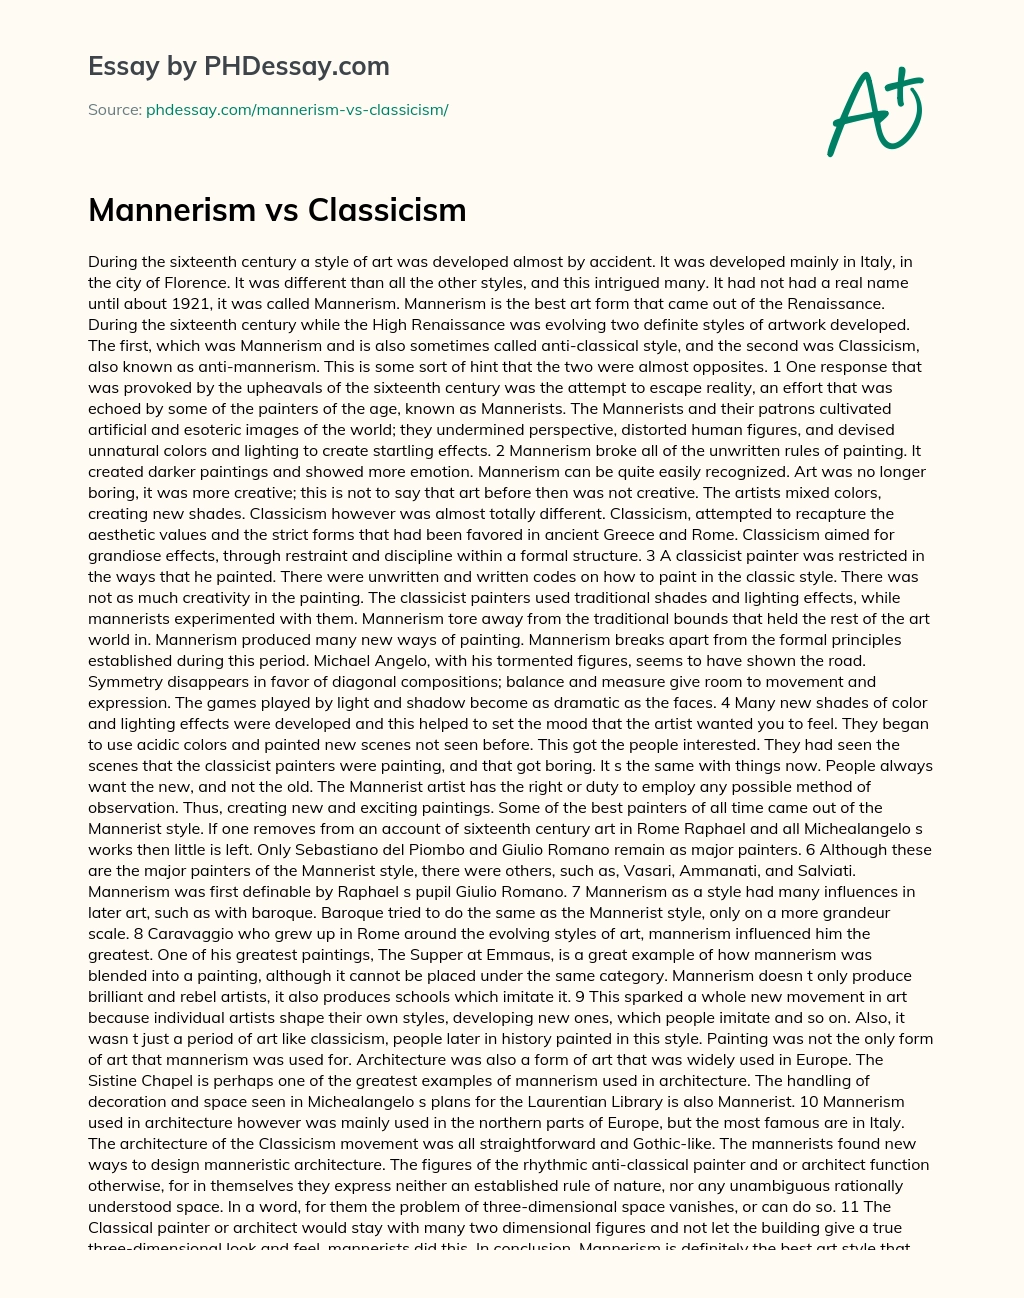 Mannerism vs Classicism essay